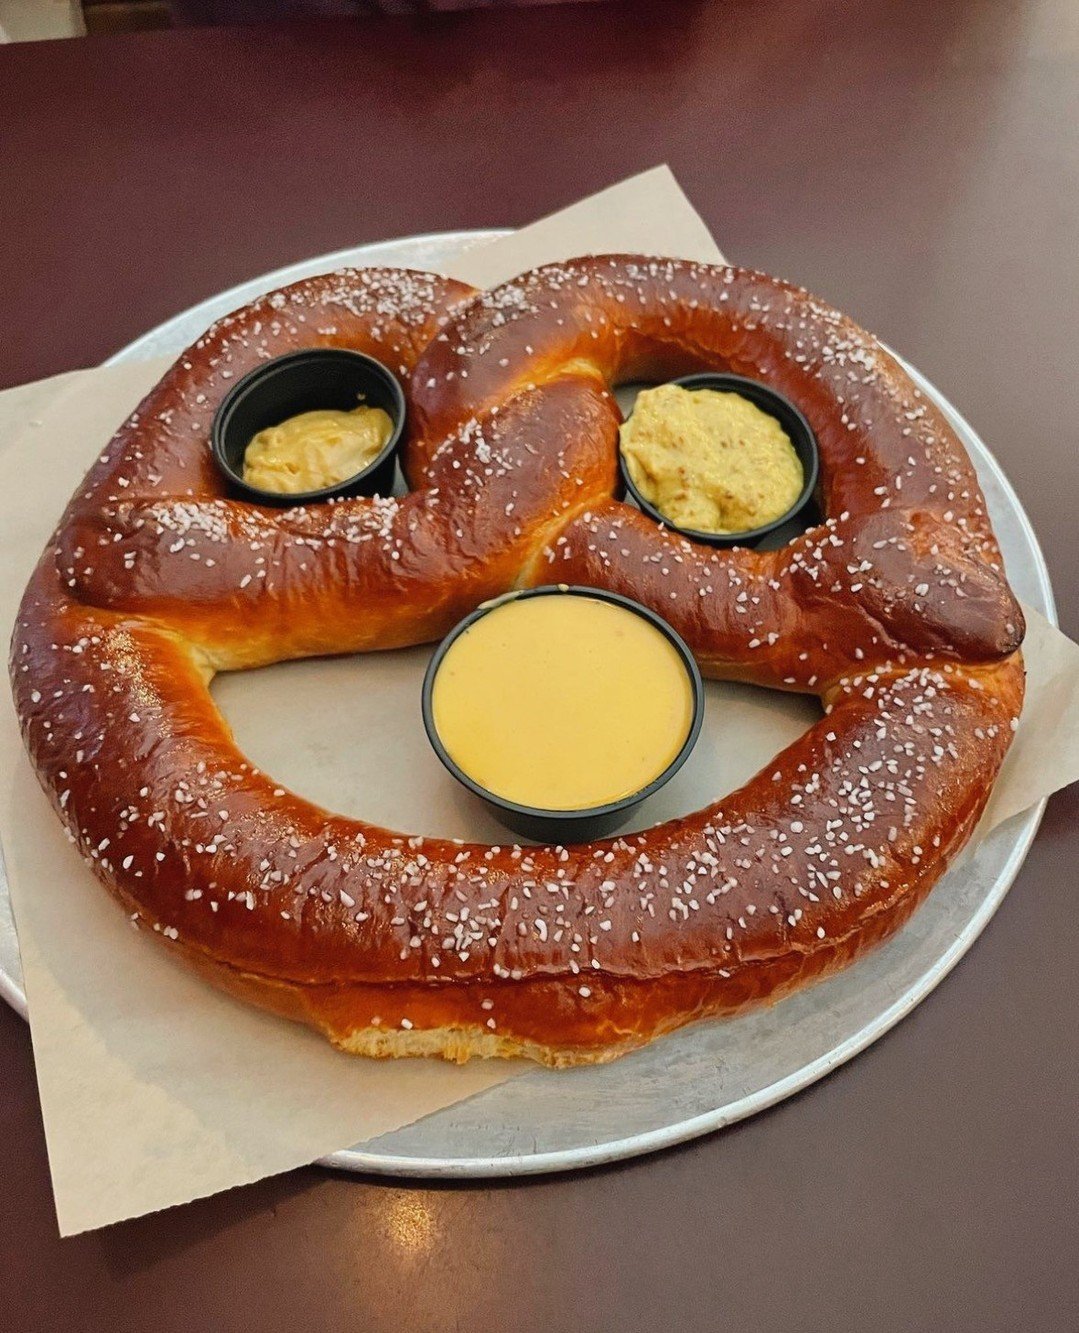 Giant pretzel &gt; packed lunch 🥨⁠
⁠
Pair it with our new small batch, Klasse Pils, for #NationalPretzelDay!⁠
⁠
📸 Jim Boot